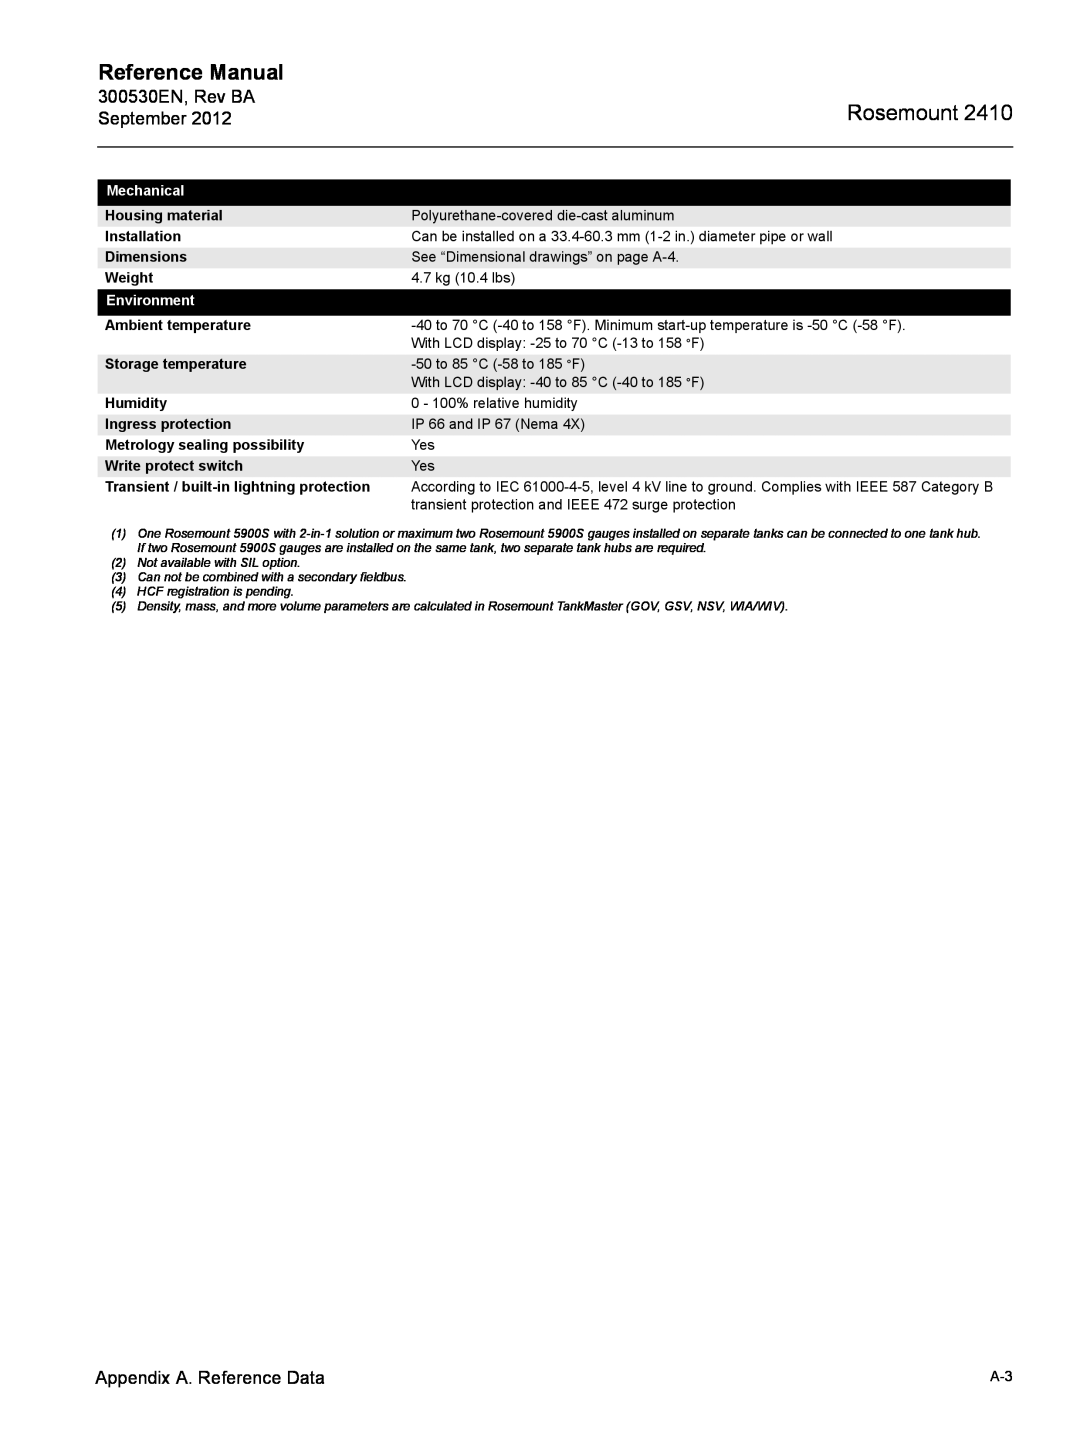 Emerson Process Management Rosemount 2410 manual Reference Manual, Housing material 